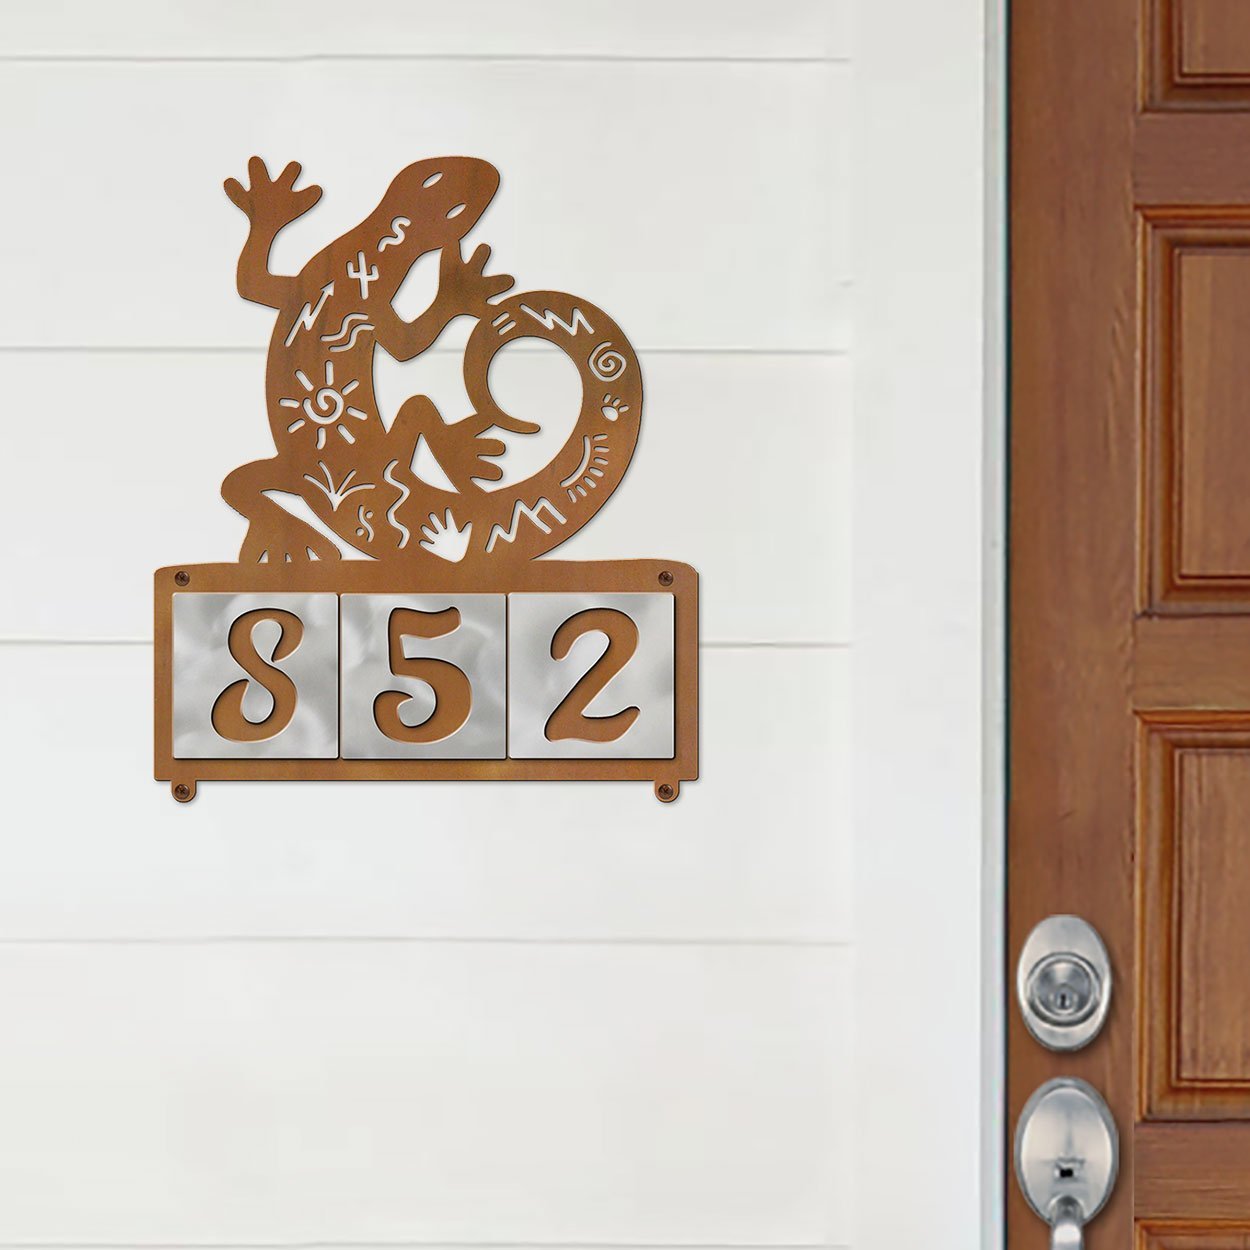 609093 - XL Petroglyph Lizard Design 3-Digit Horizontal 6in Tile Outdoor House Numbers